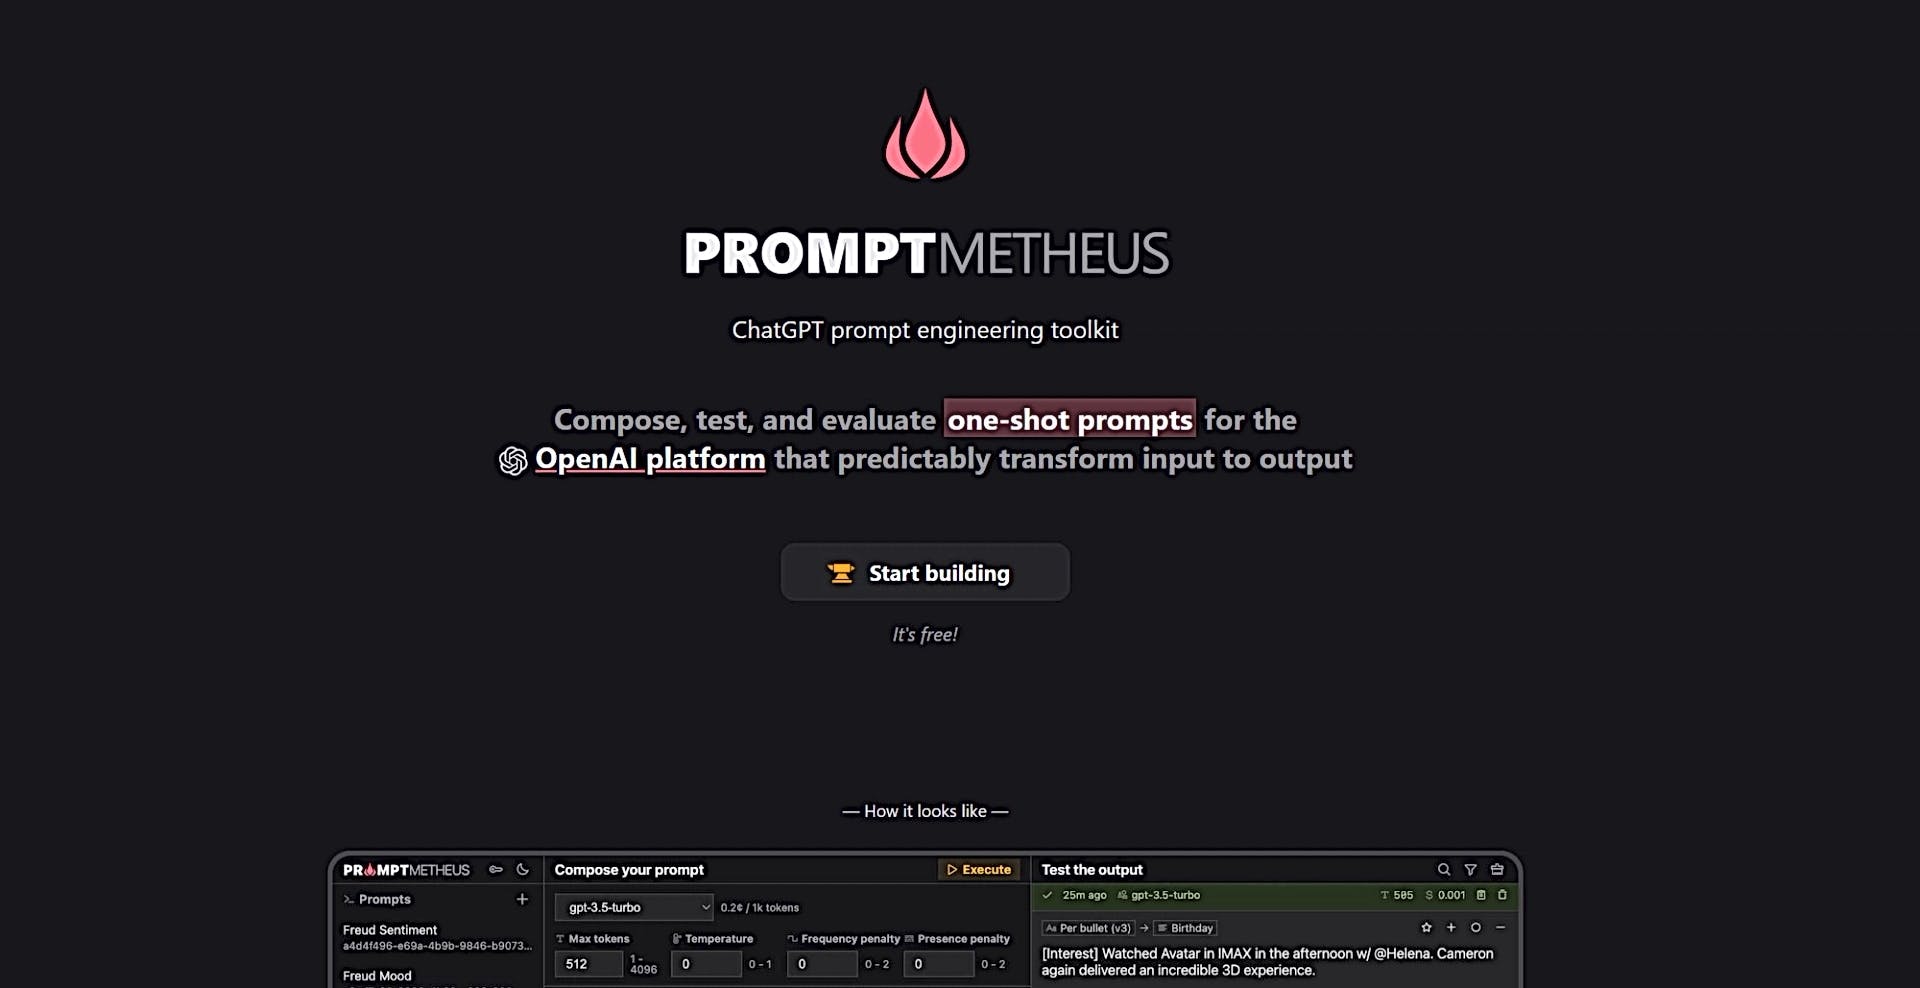 Promptmetheus featured